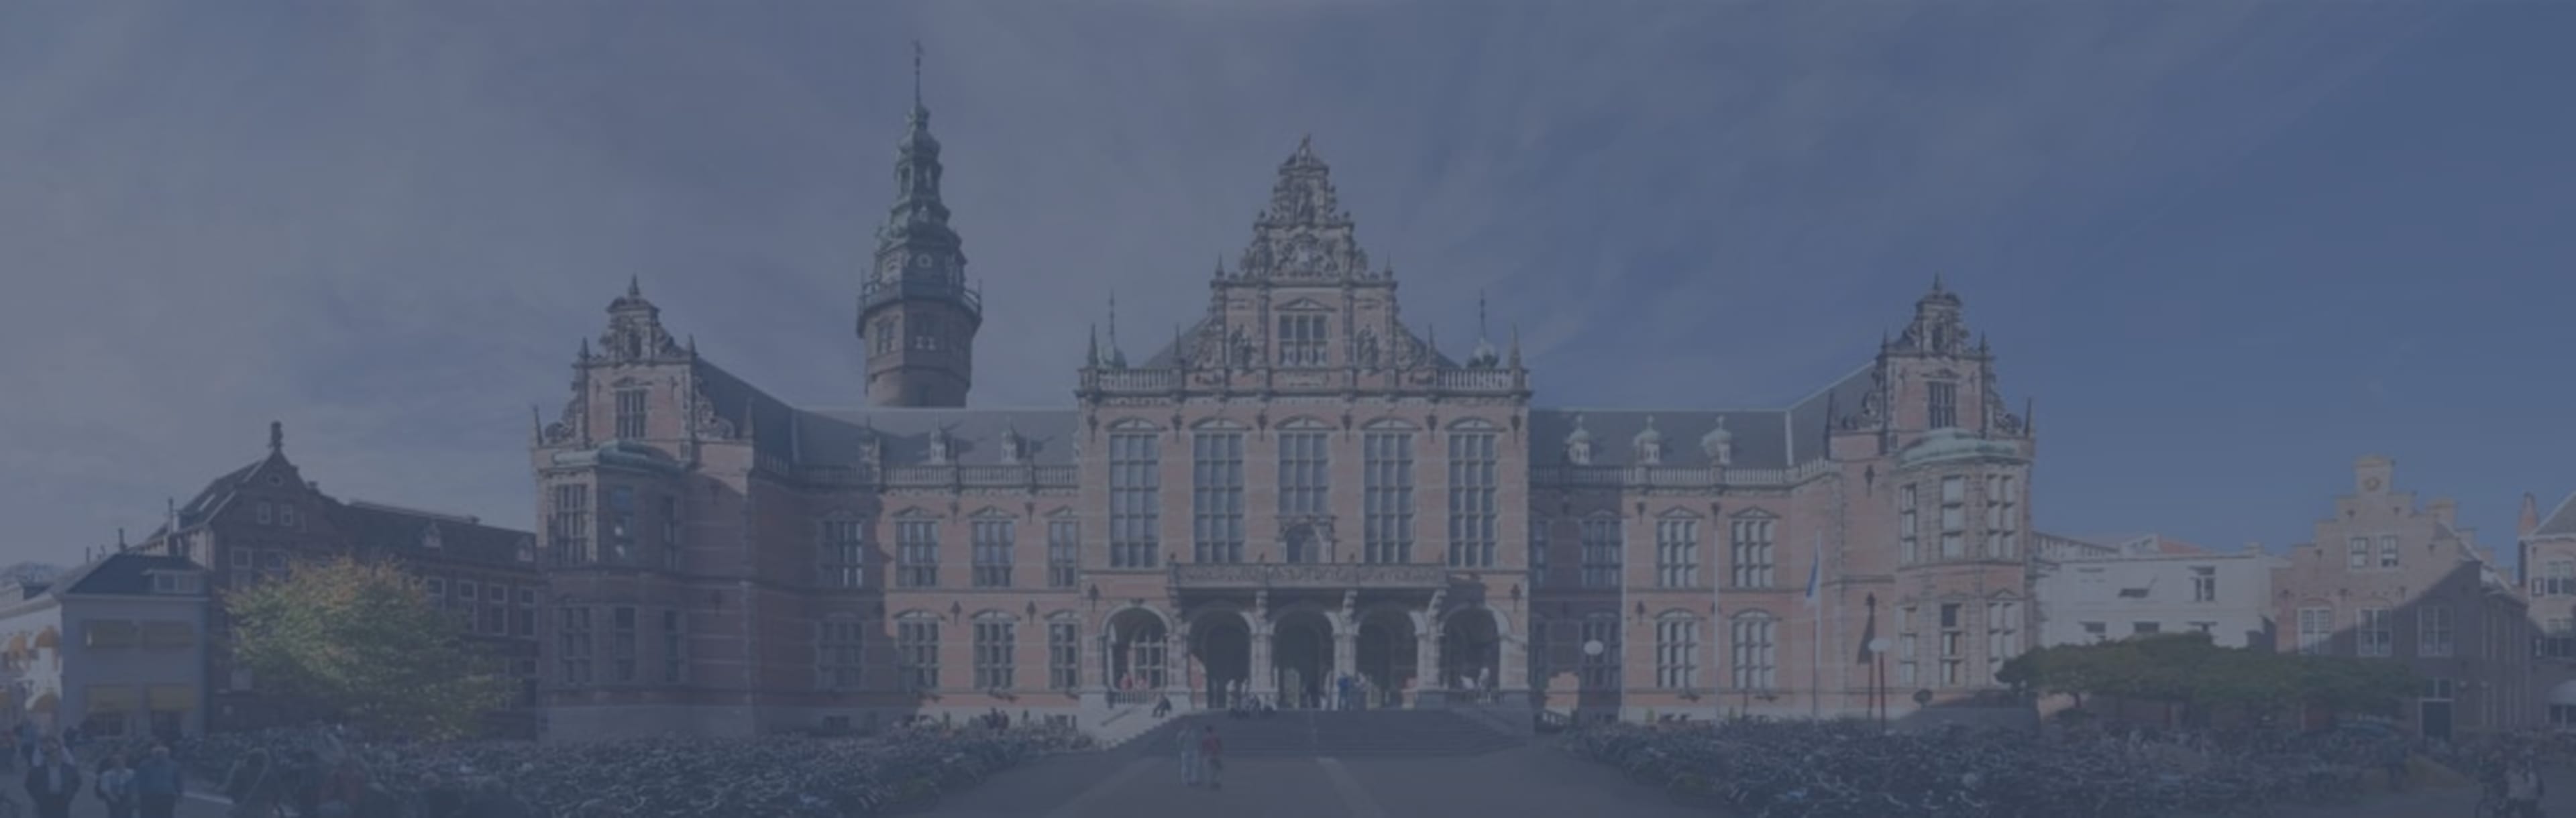 University of Groningen 能源与气候法LLM